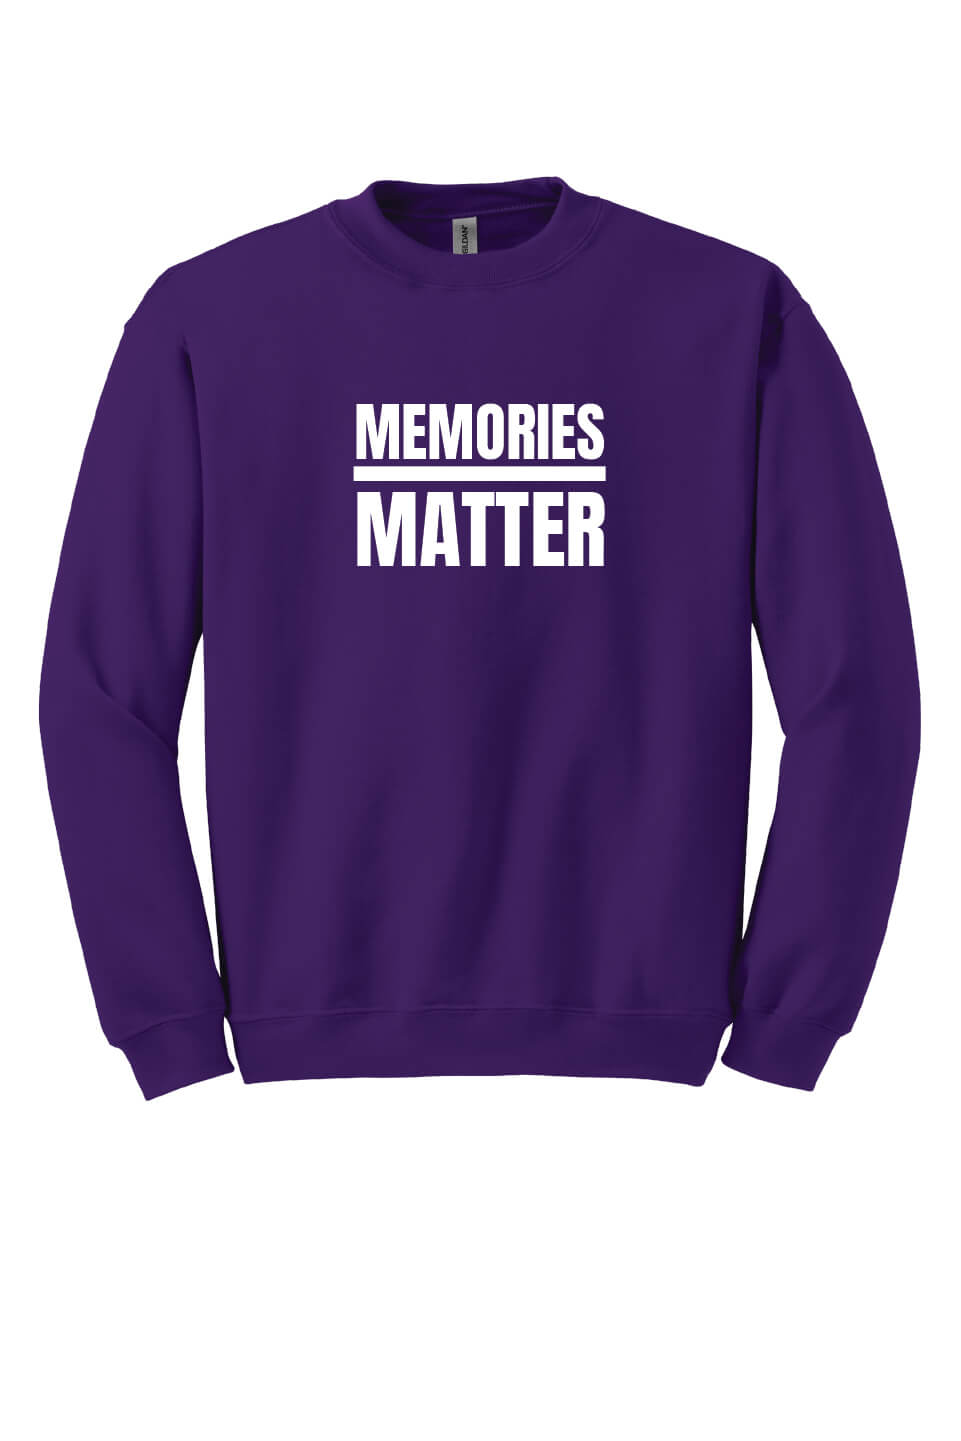 Memories Matter Flag Back Crewneck Sweatshirt purple front